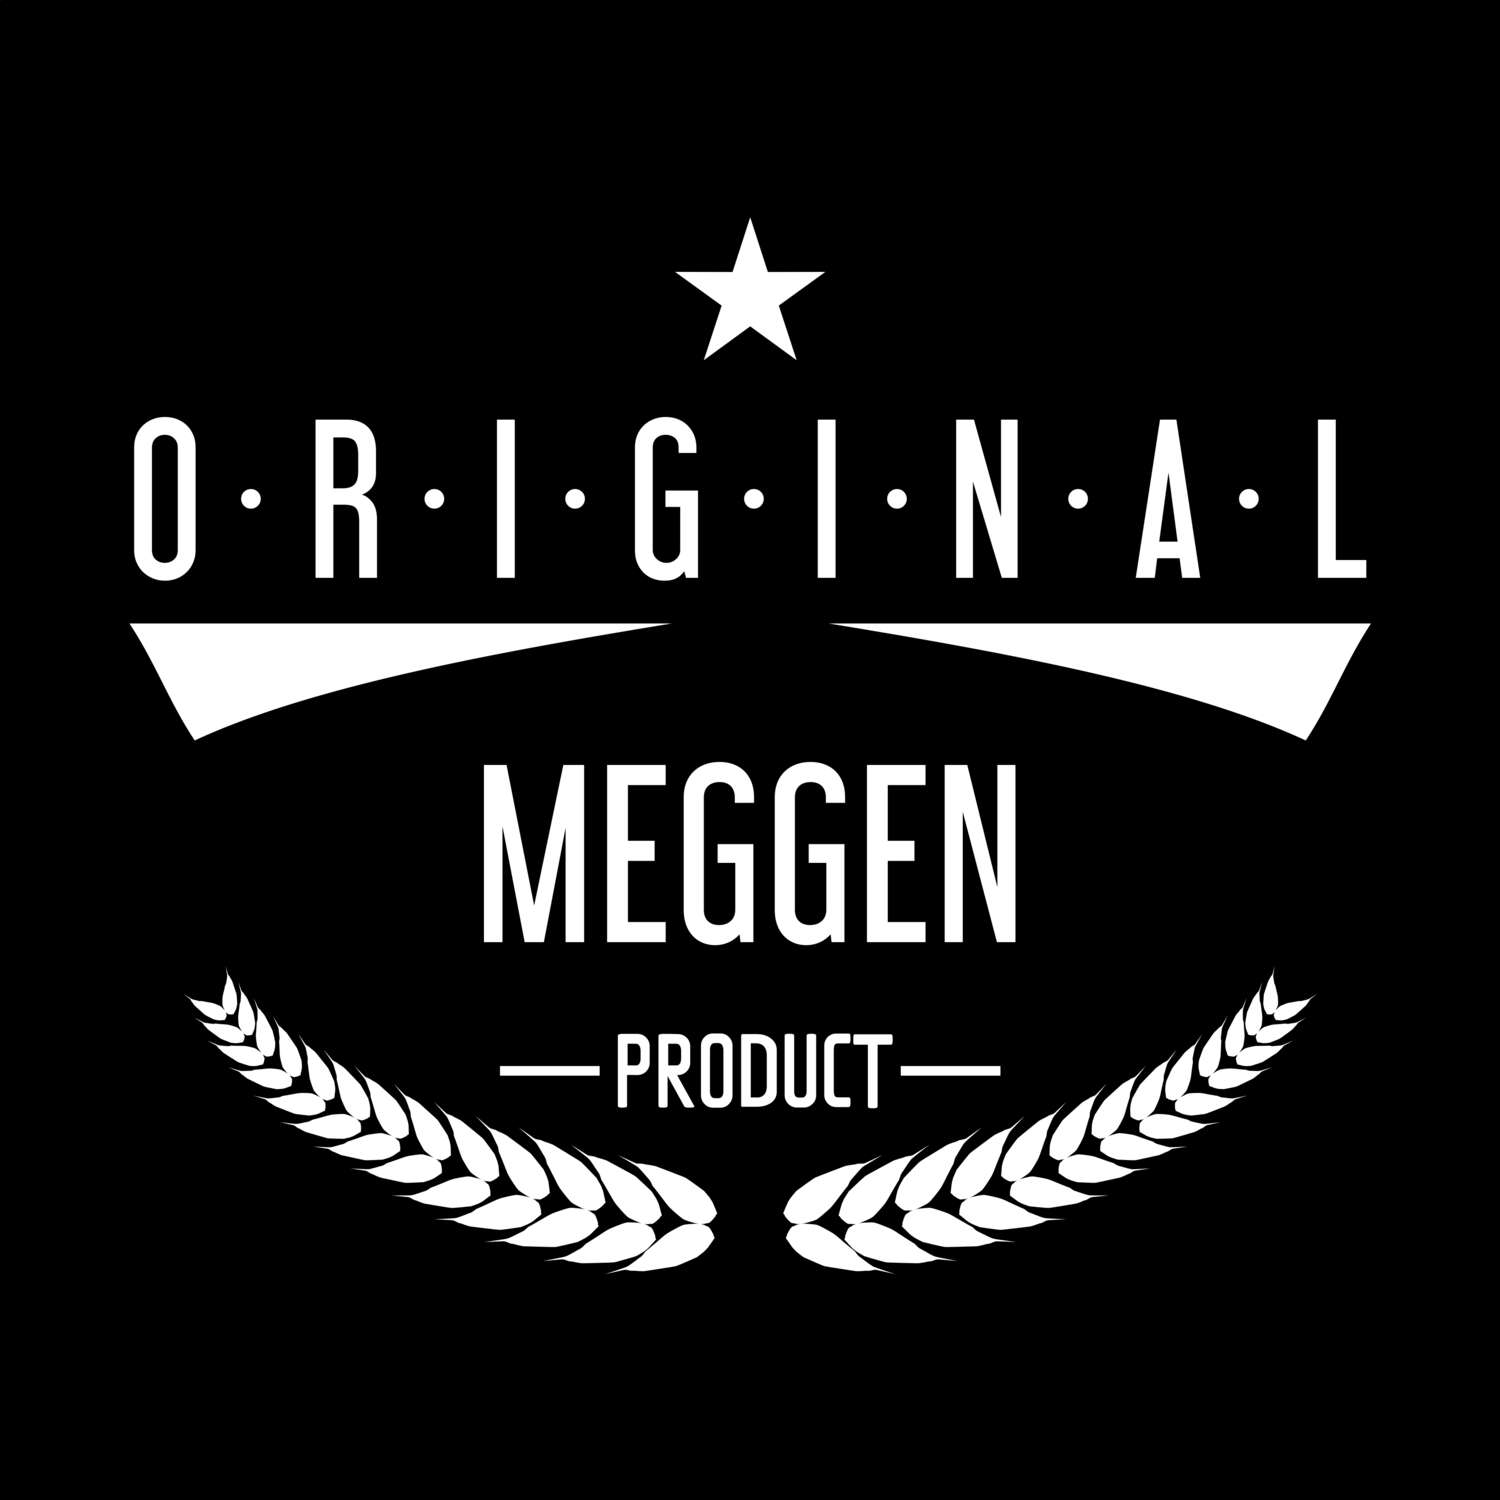 Meggen T-Shirt »Original Product«